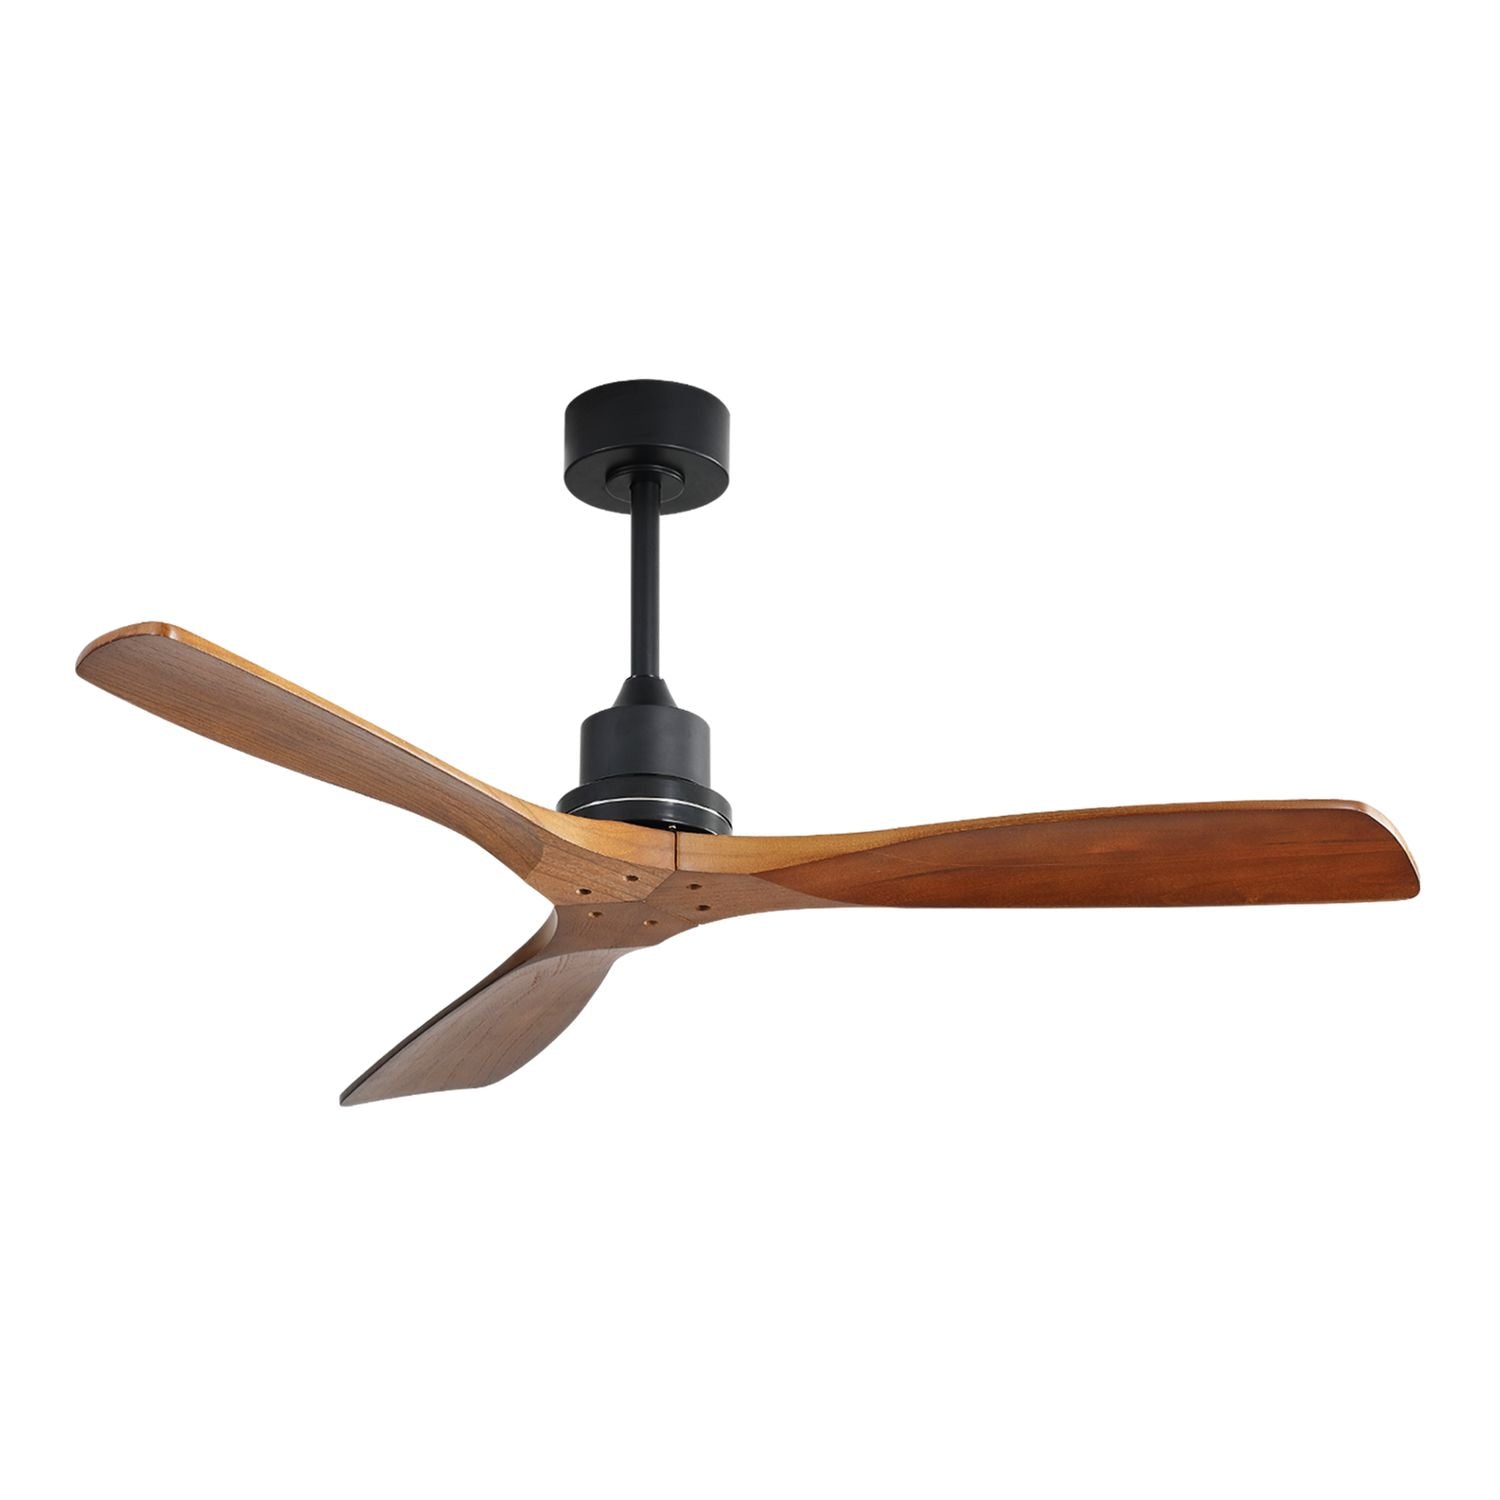 Builder Fans Co. 52 Inch Wood Blade Ceiling Fan with Remote Control - Matte Black, Walnut Blades